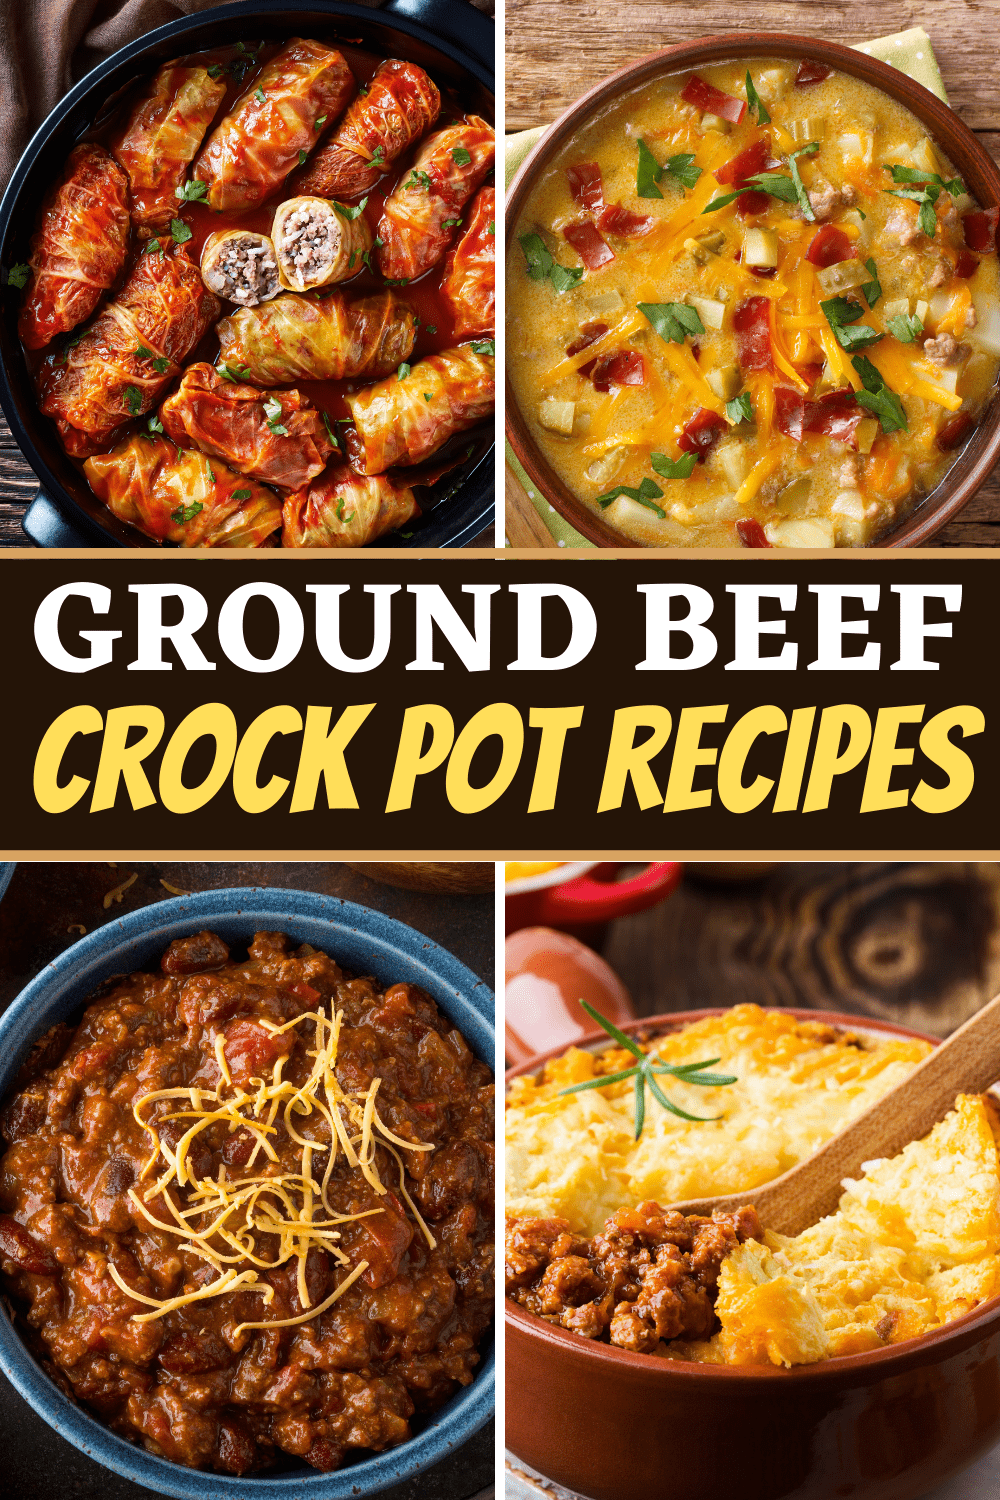 24 Ground Beef Crock Pot Recipes - Insanely Good